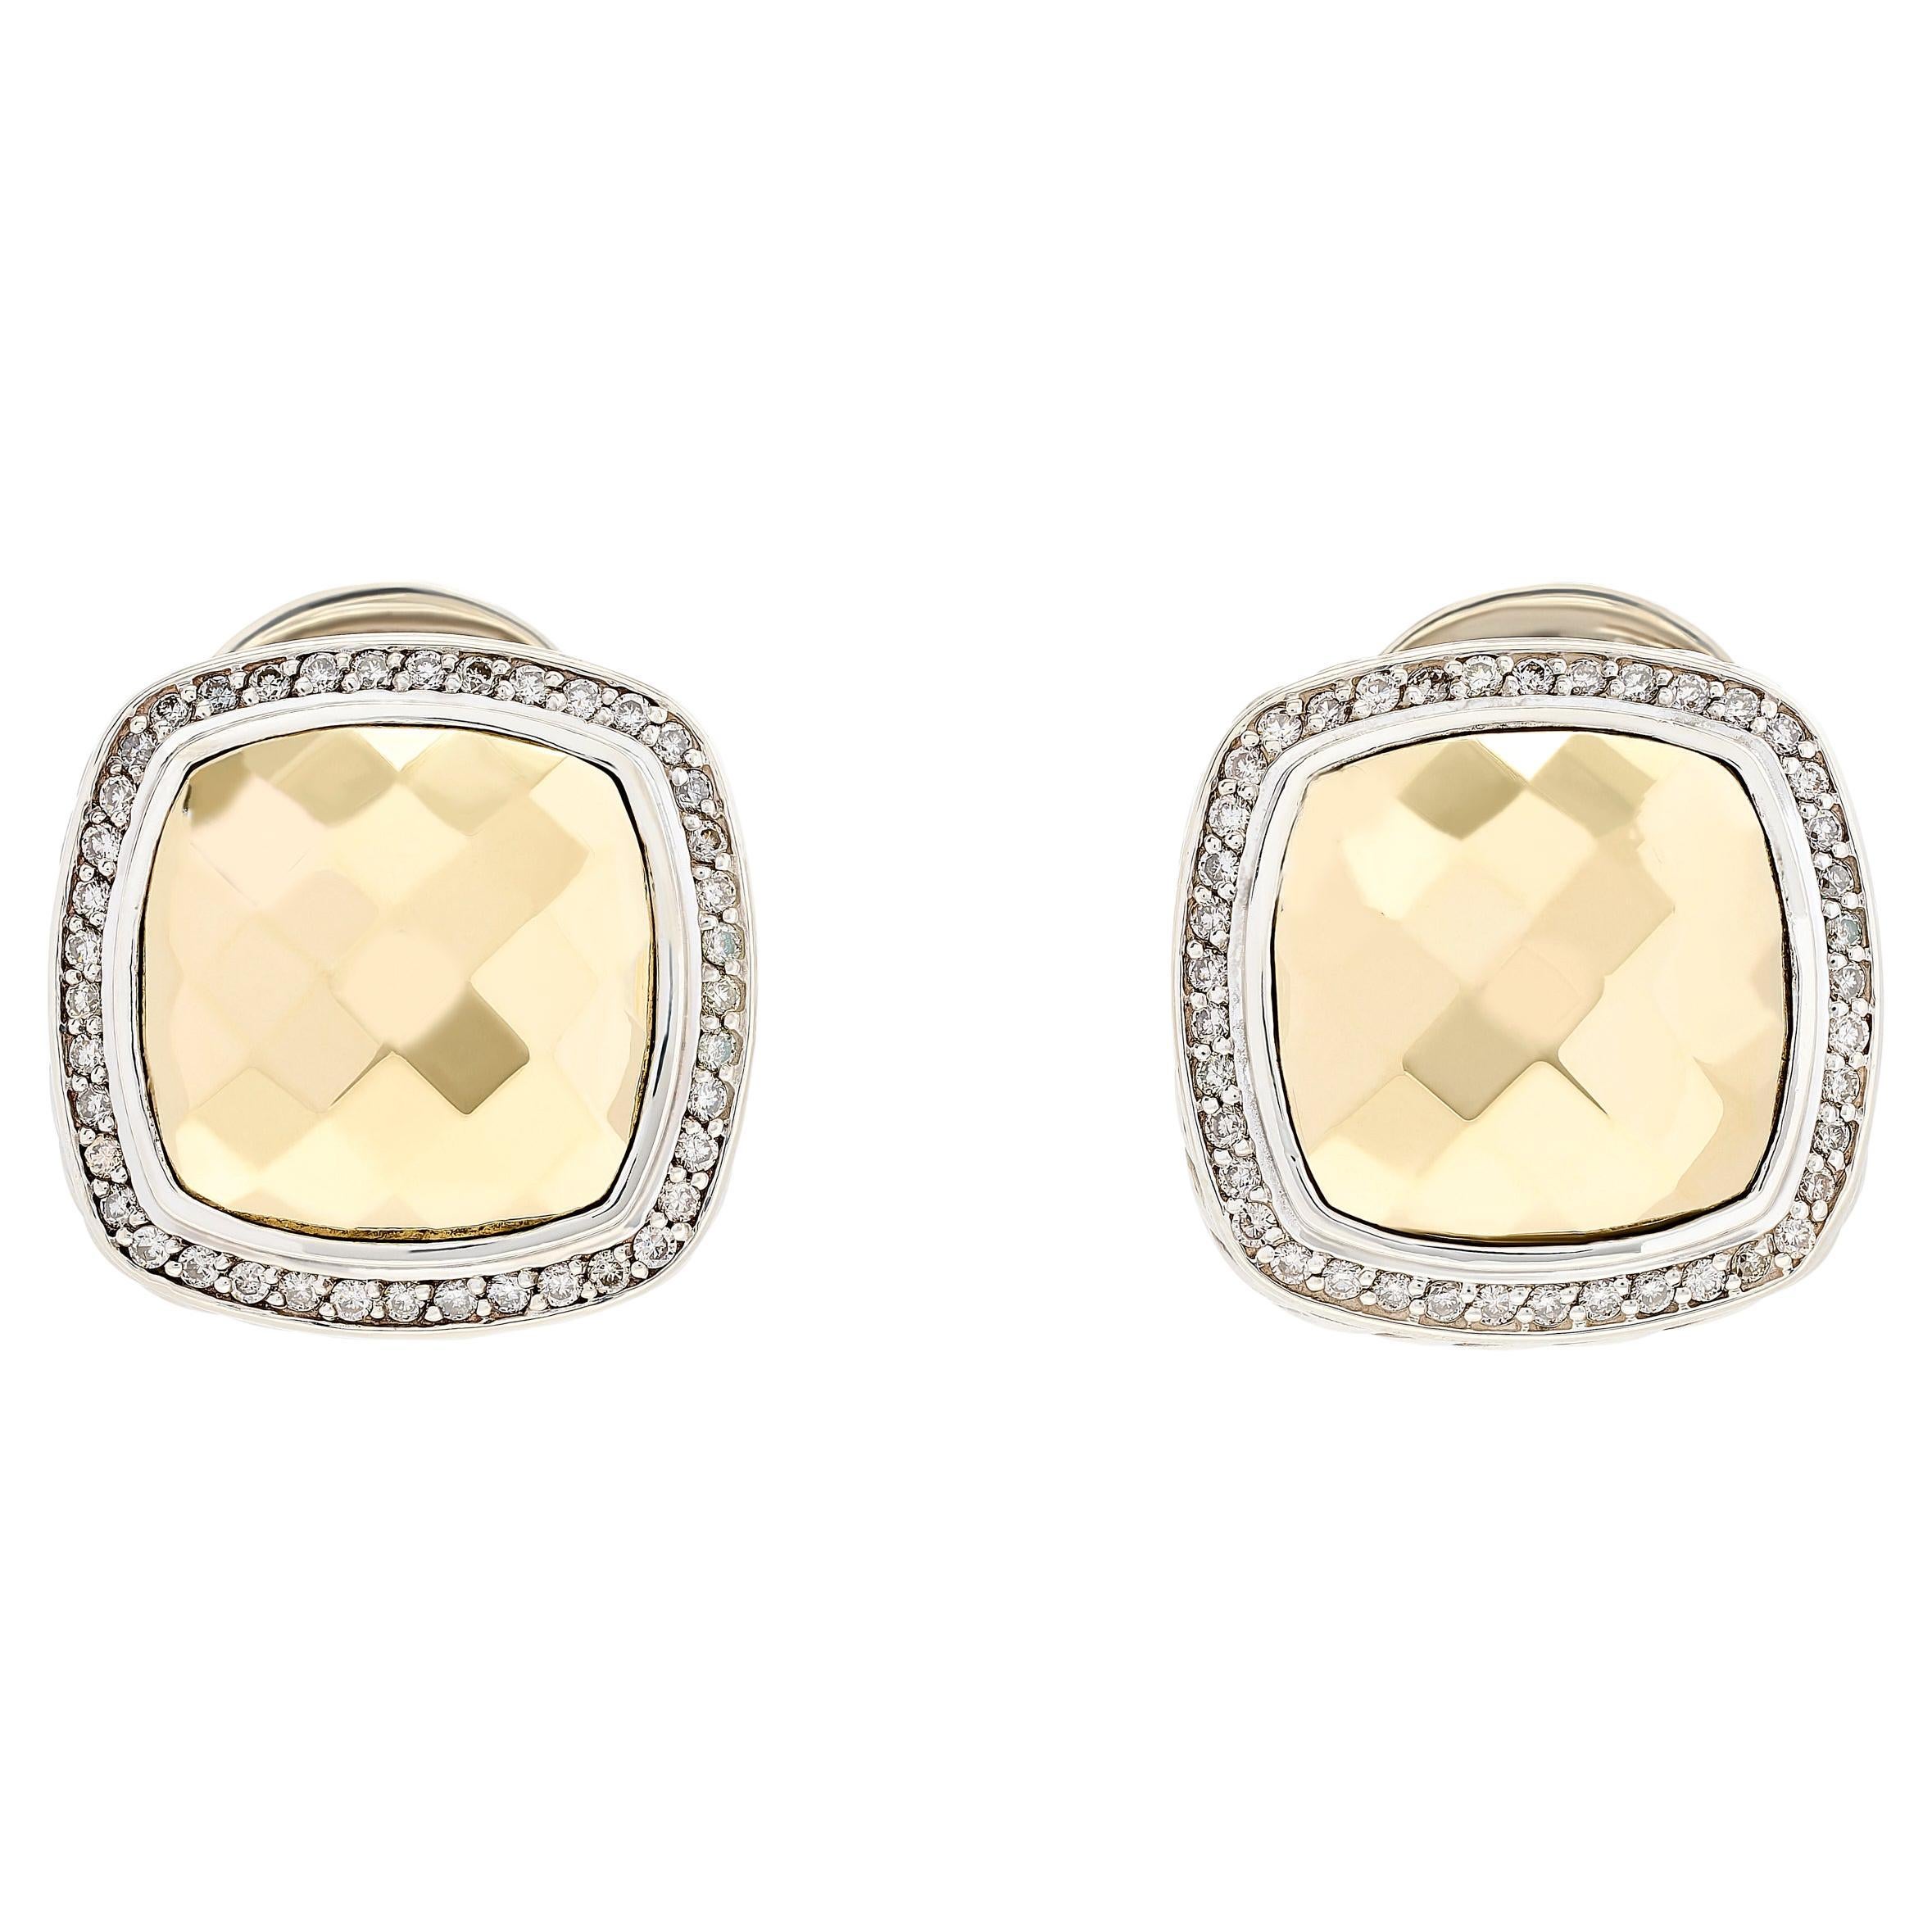 David Yurman Silver and Textured 18 Karat Yellow Gold Diamond Halo Earrings For Sale